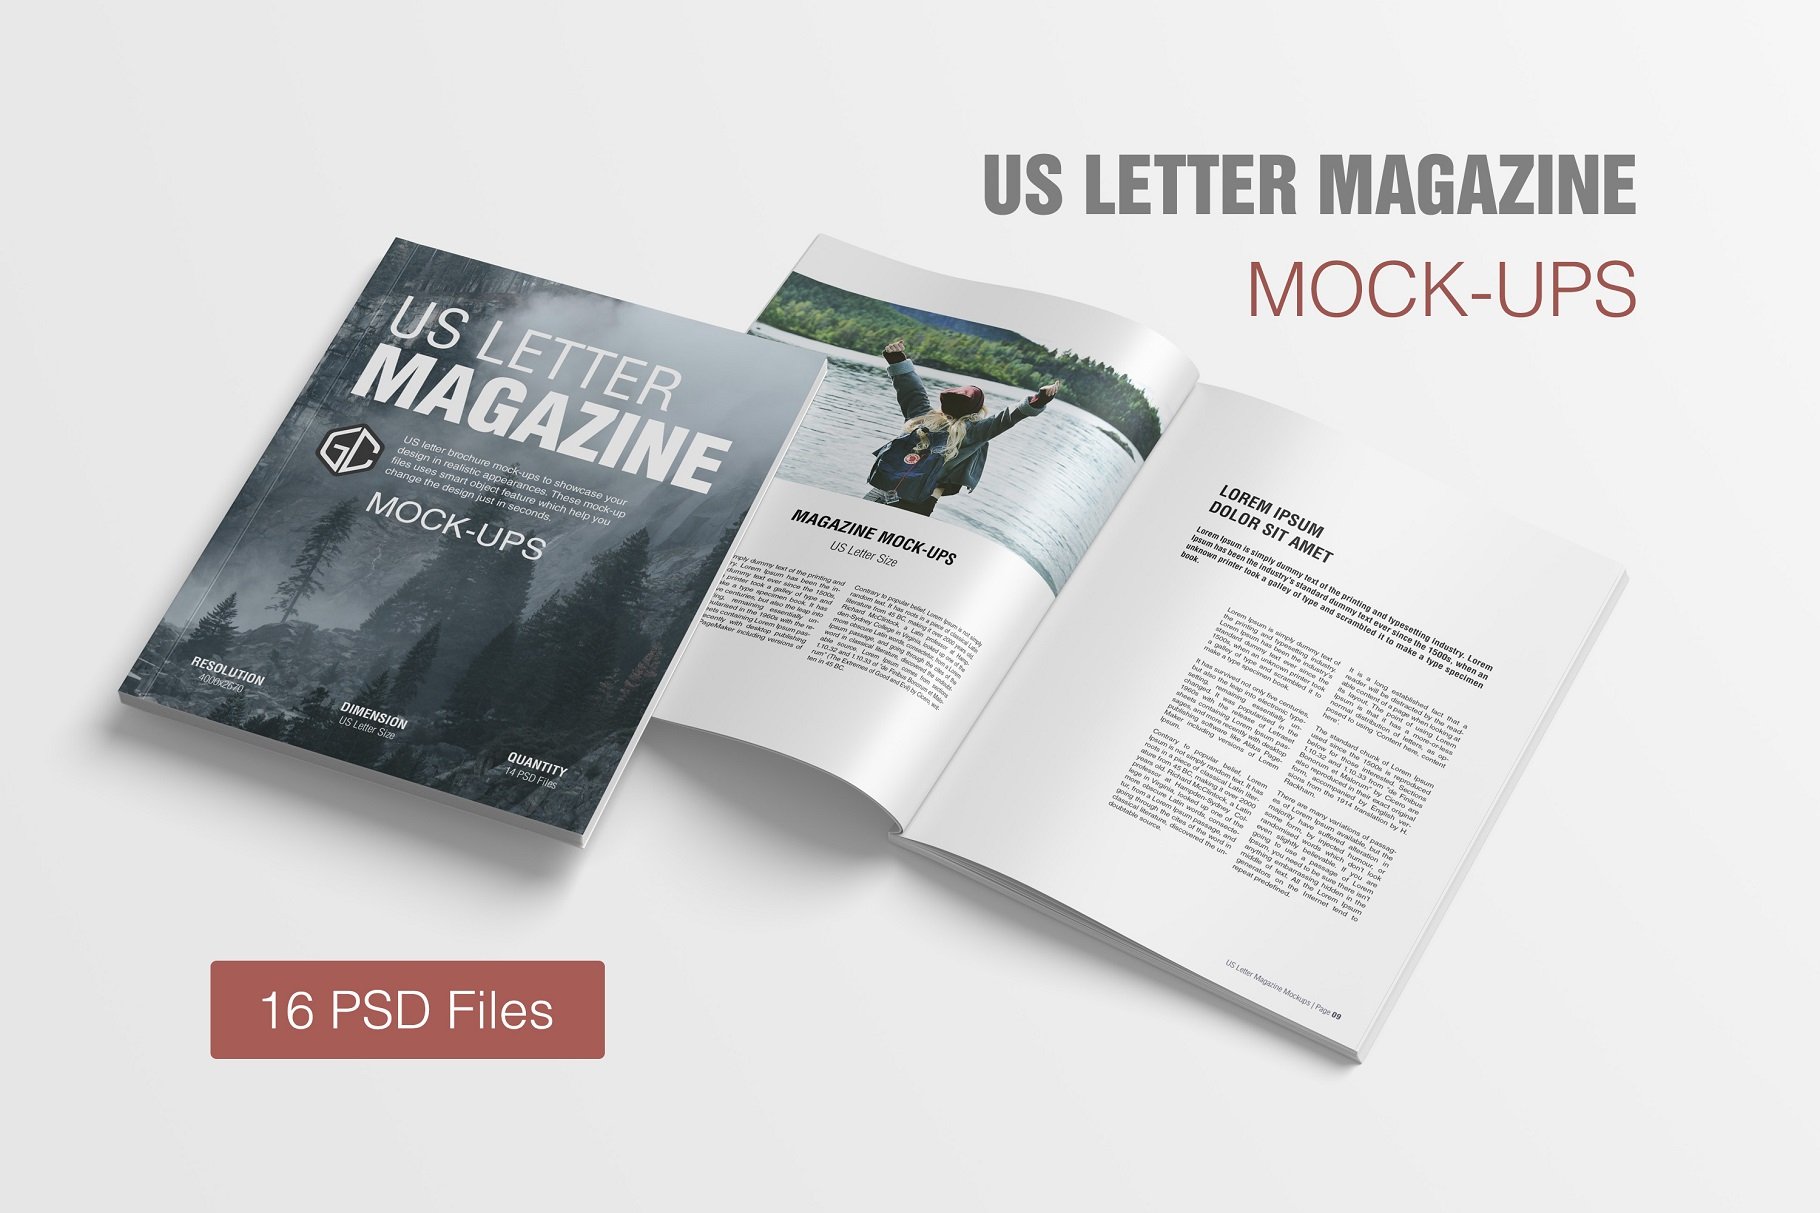 US Letter Magazine Mockup cover image.